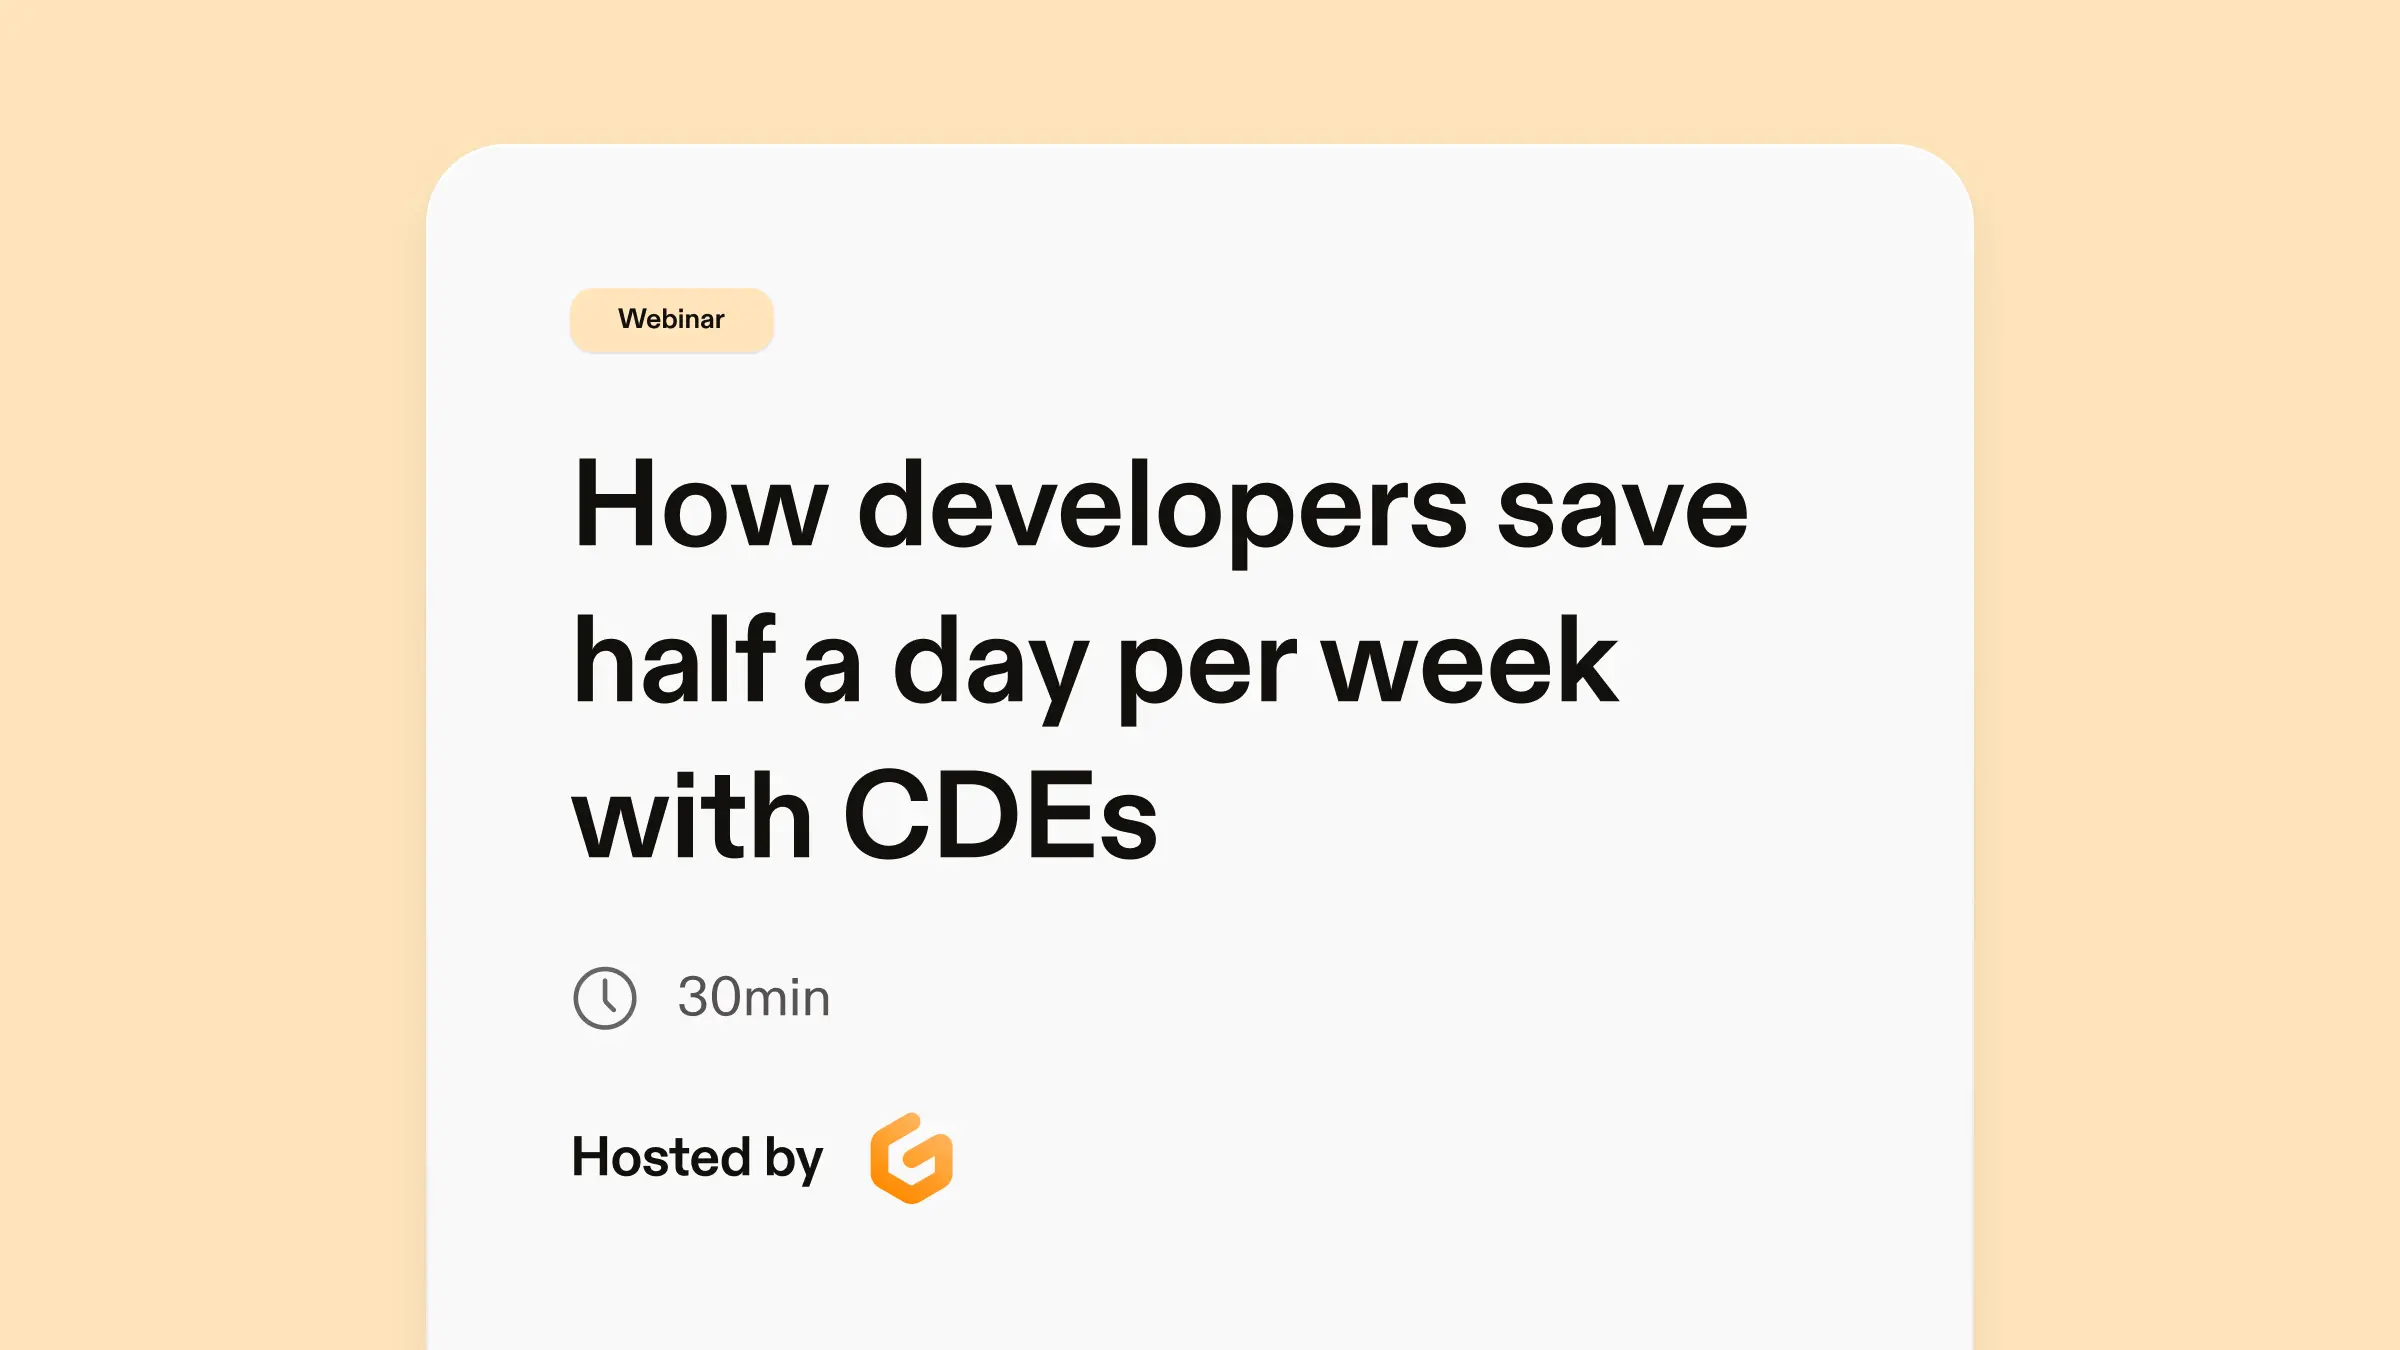 Cloud development environment adoption stories: Shares.io